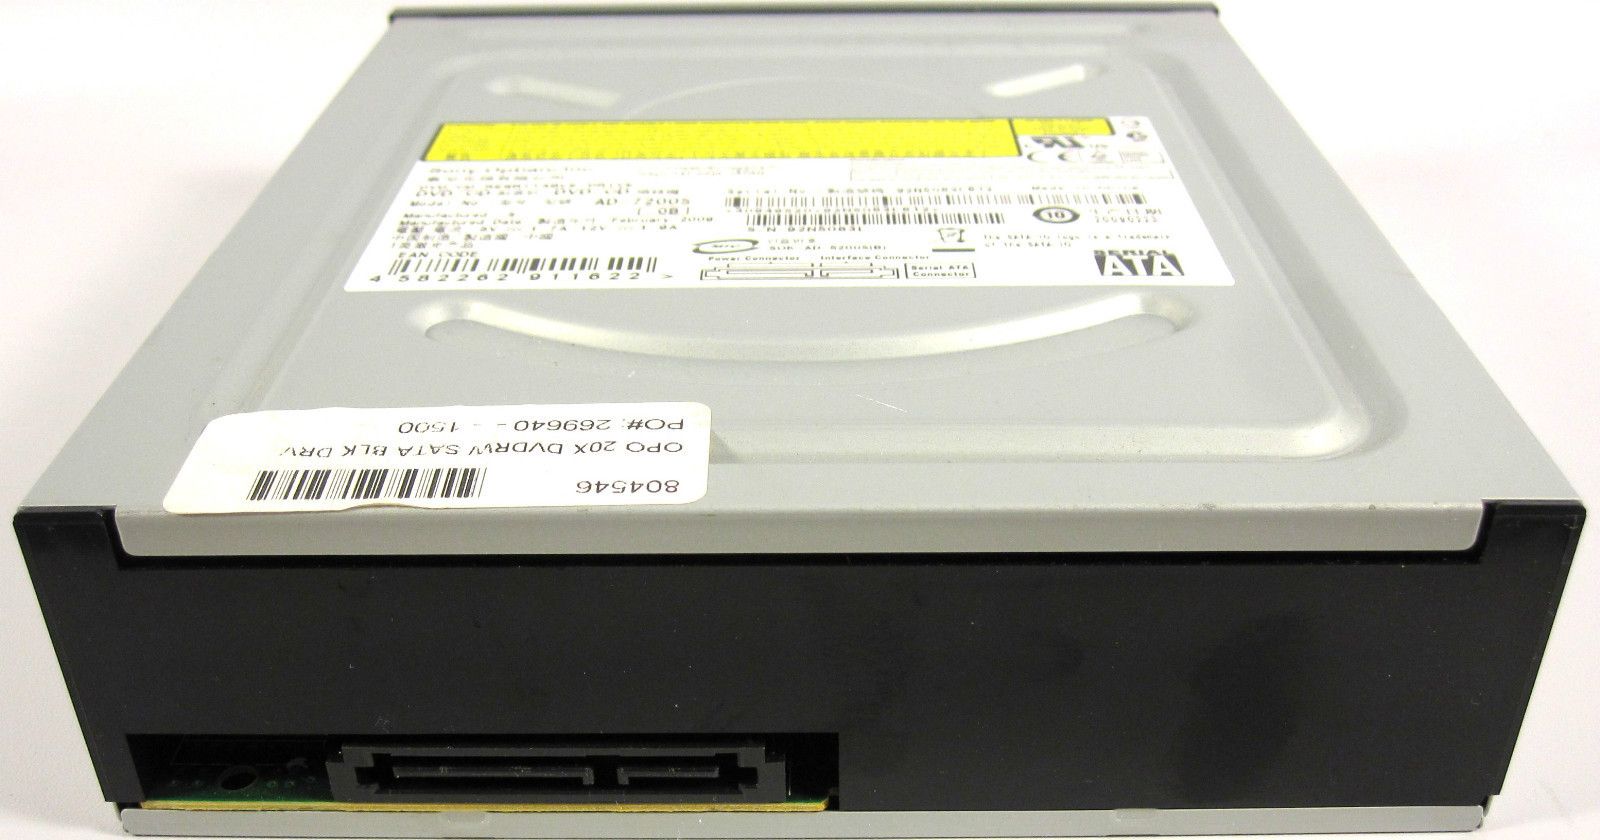   20x DL Dual Layer SATA DVD±RW Multi Burner Optical Disk Drive